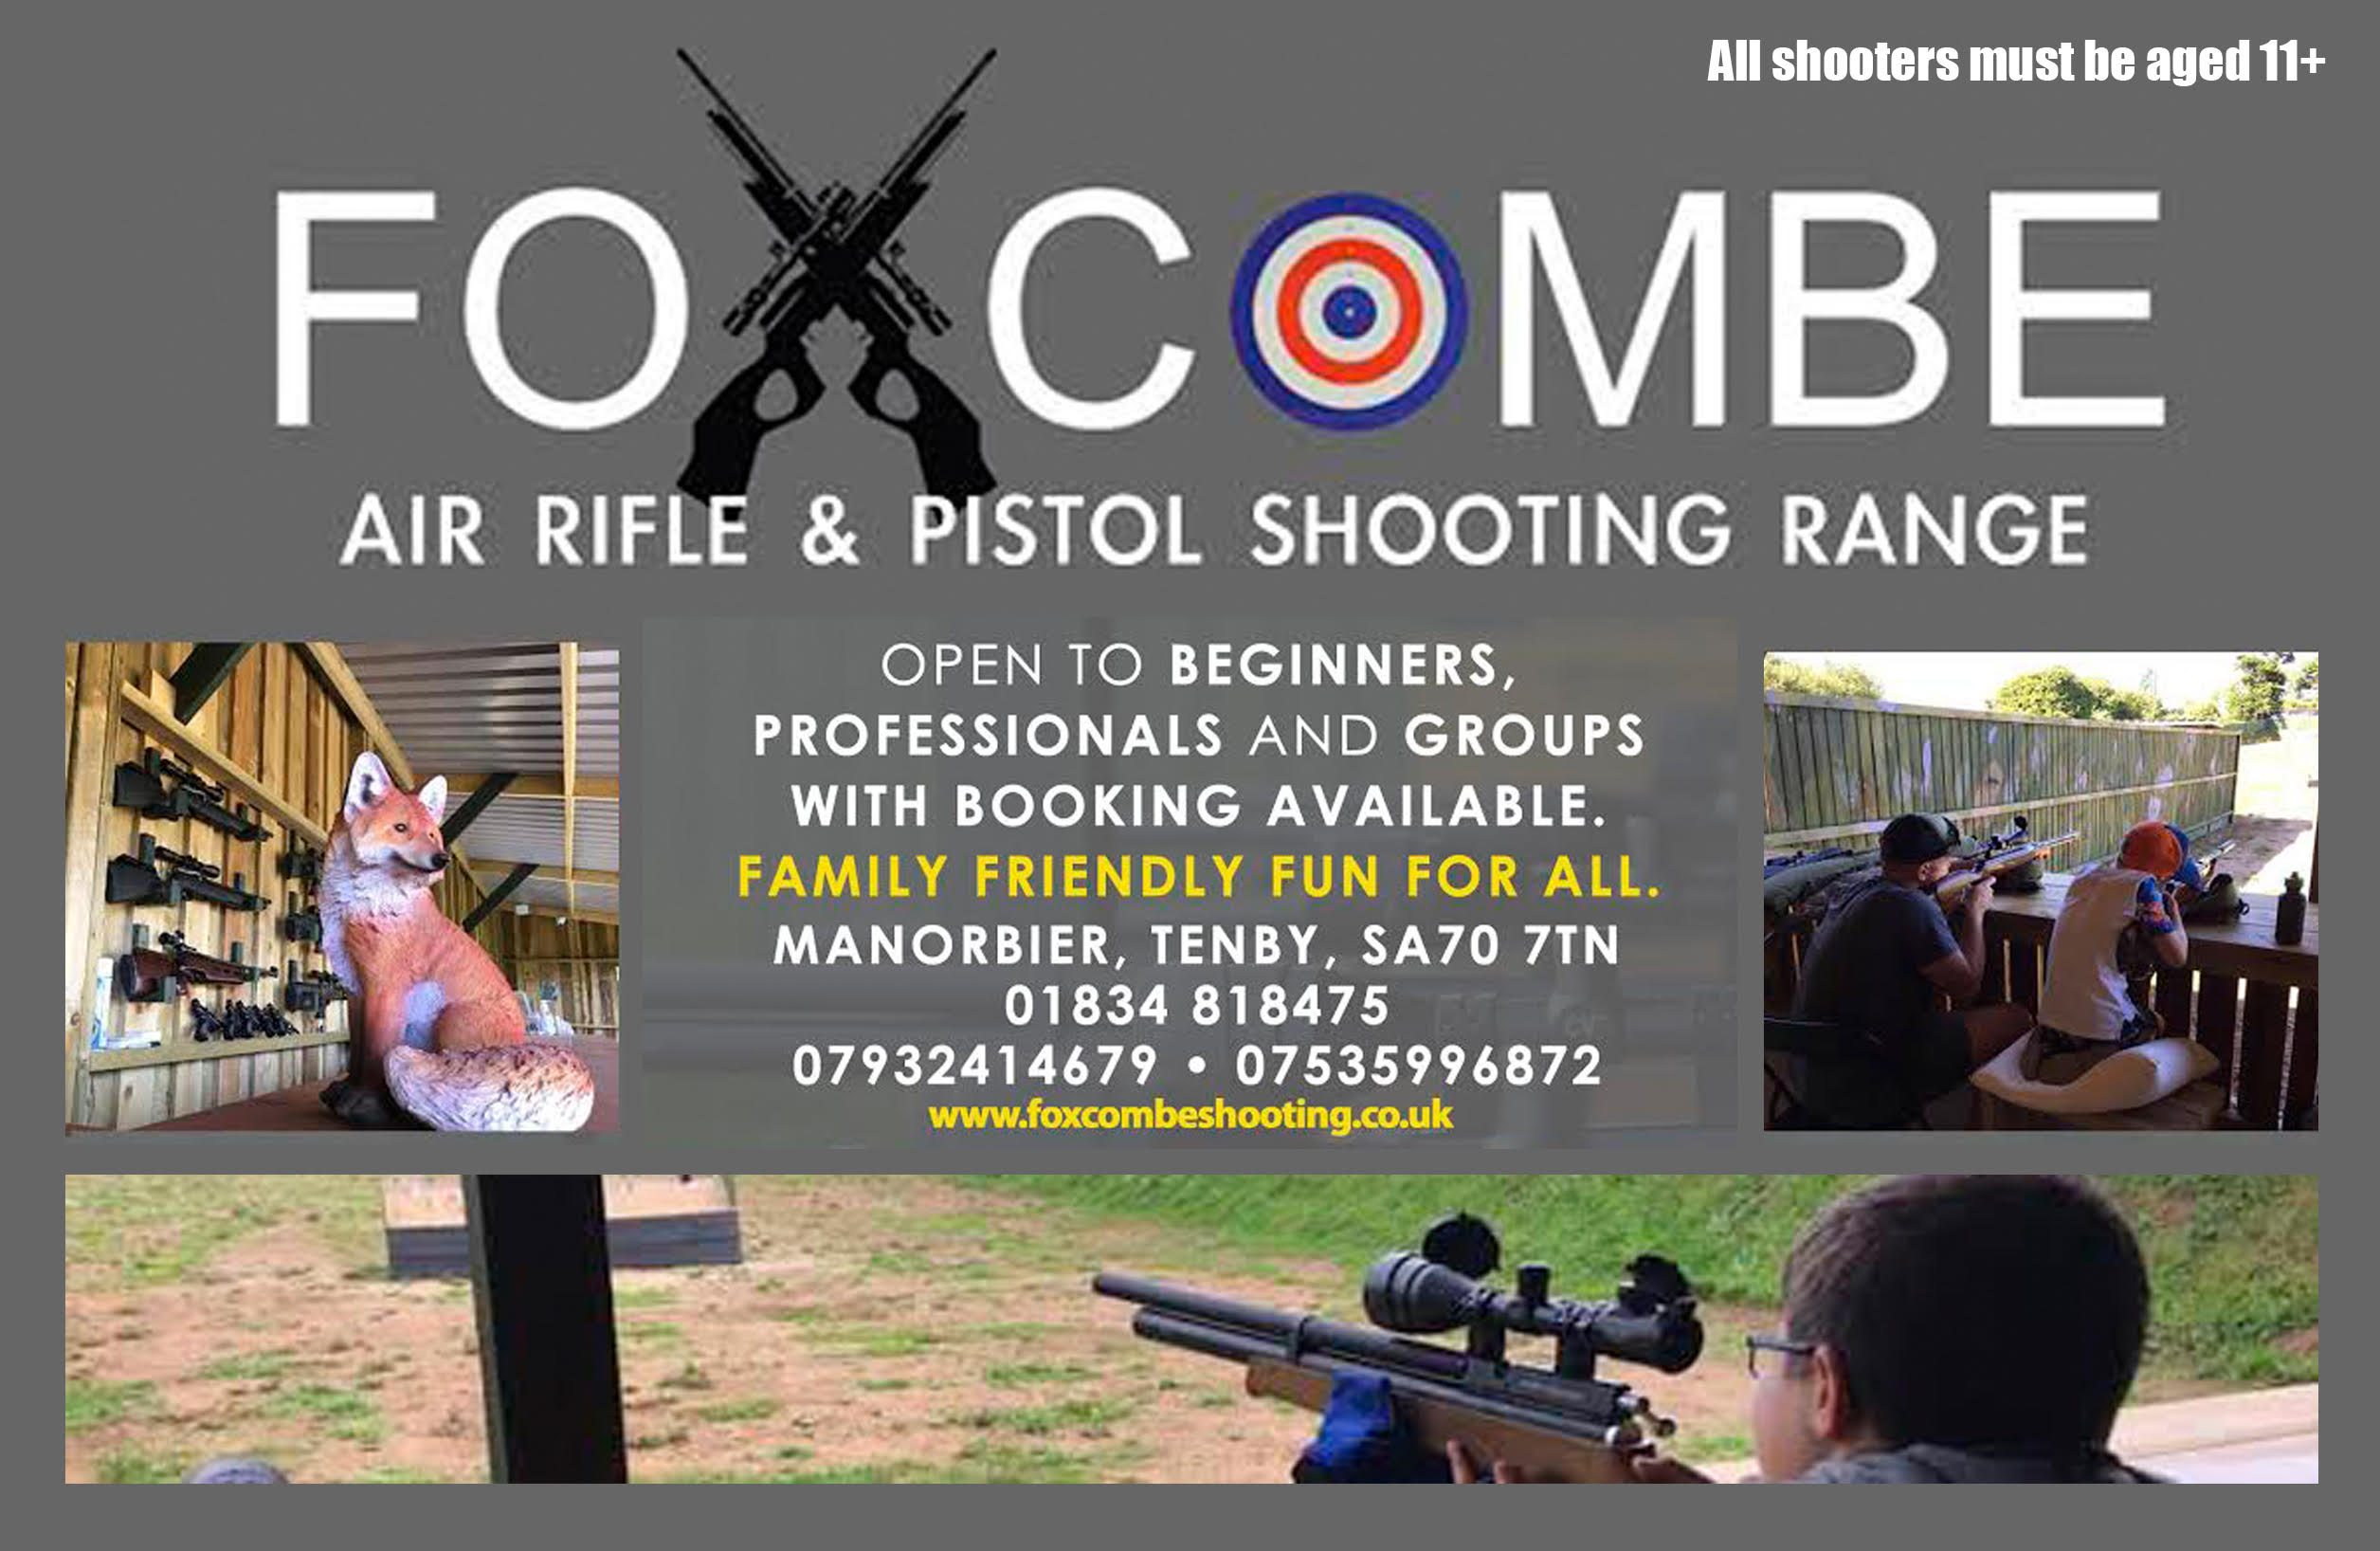 Foxcombe Air rifle and Pistol Shooting Range